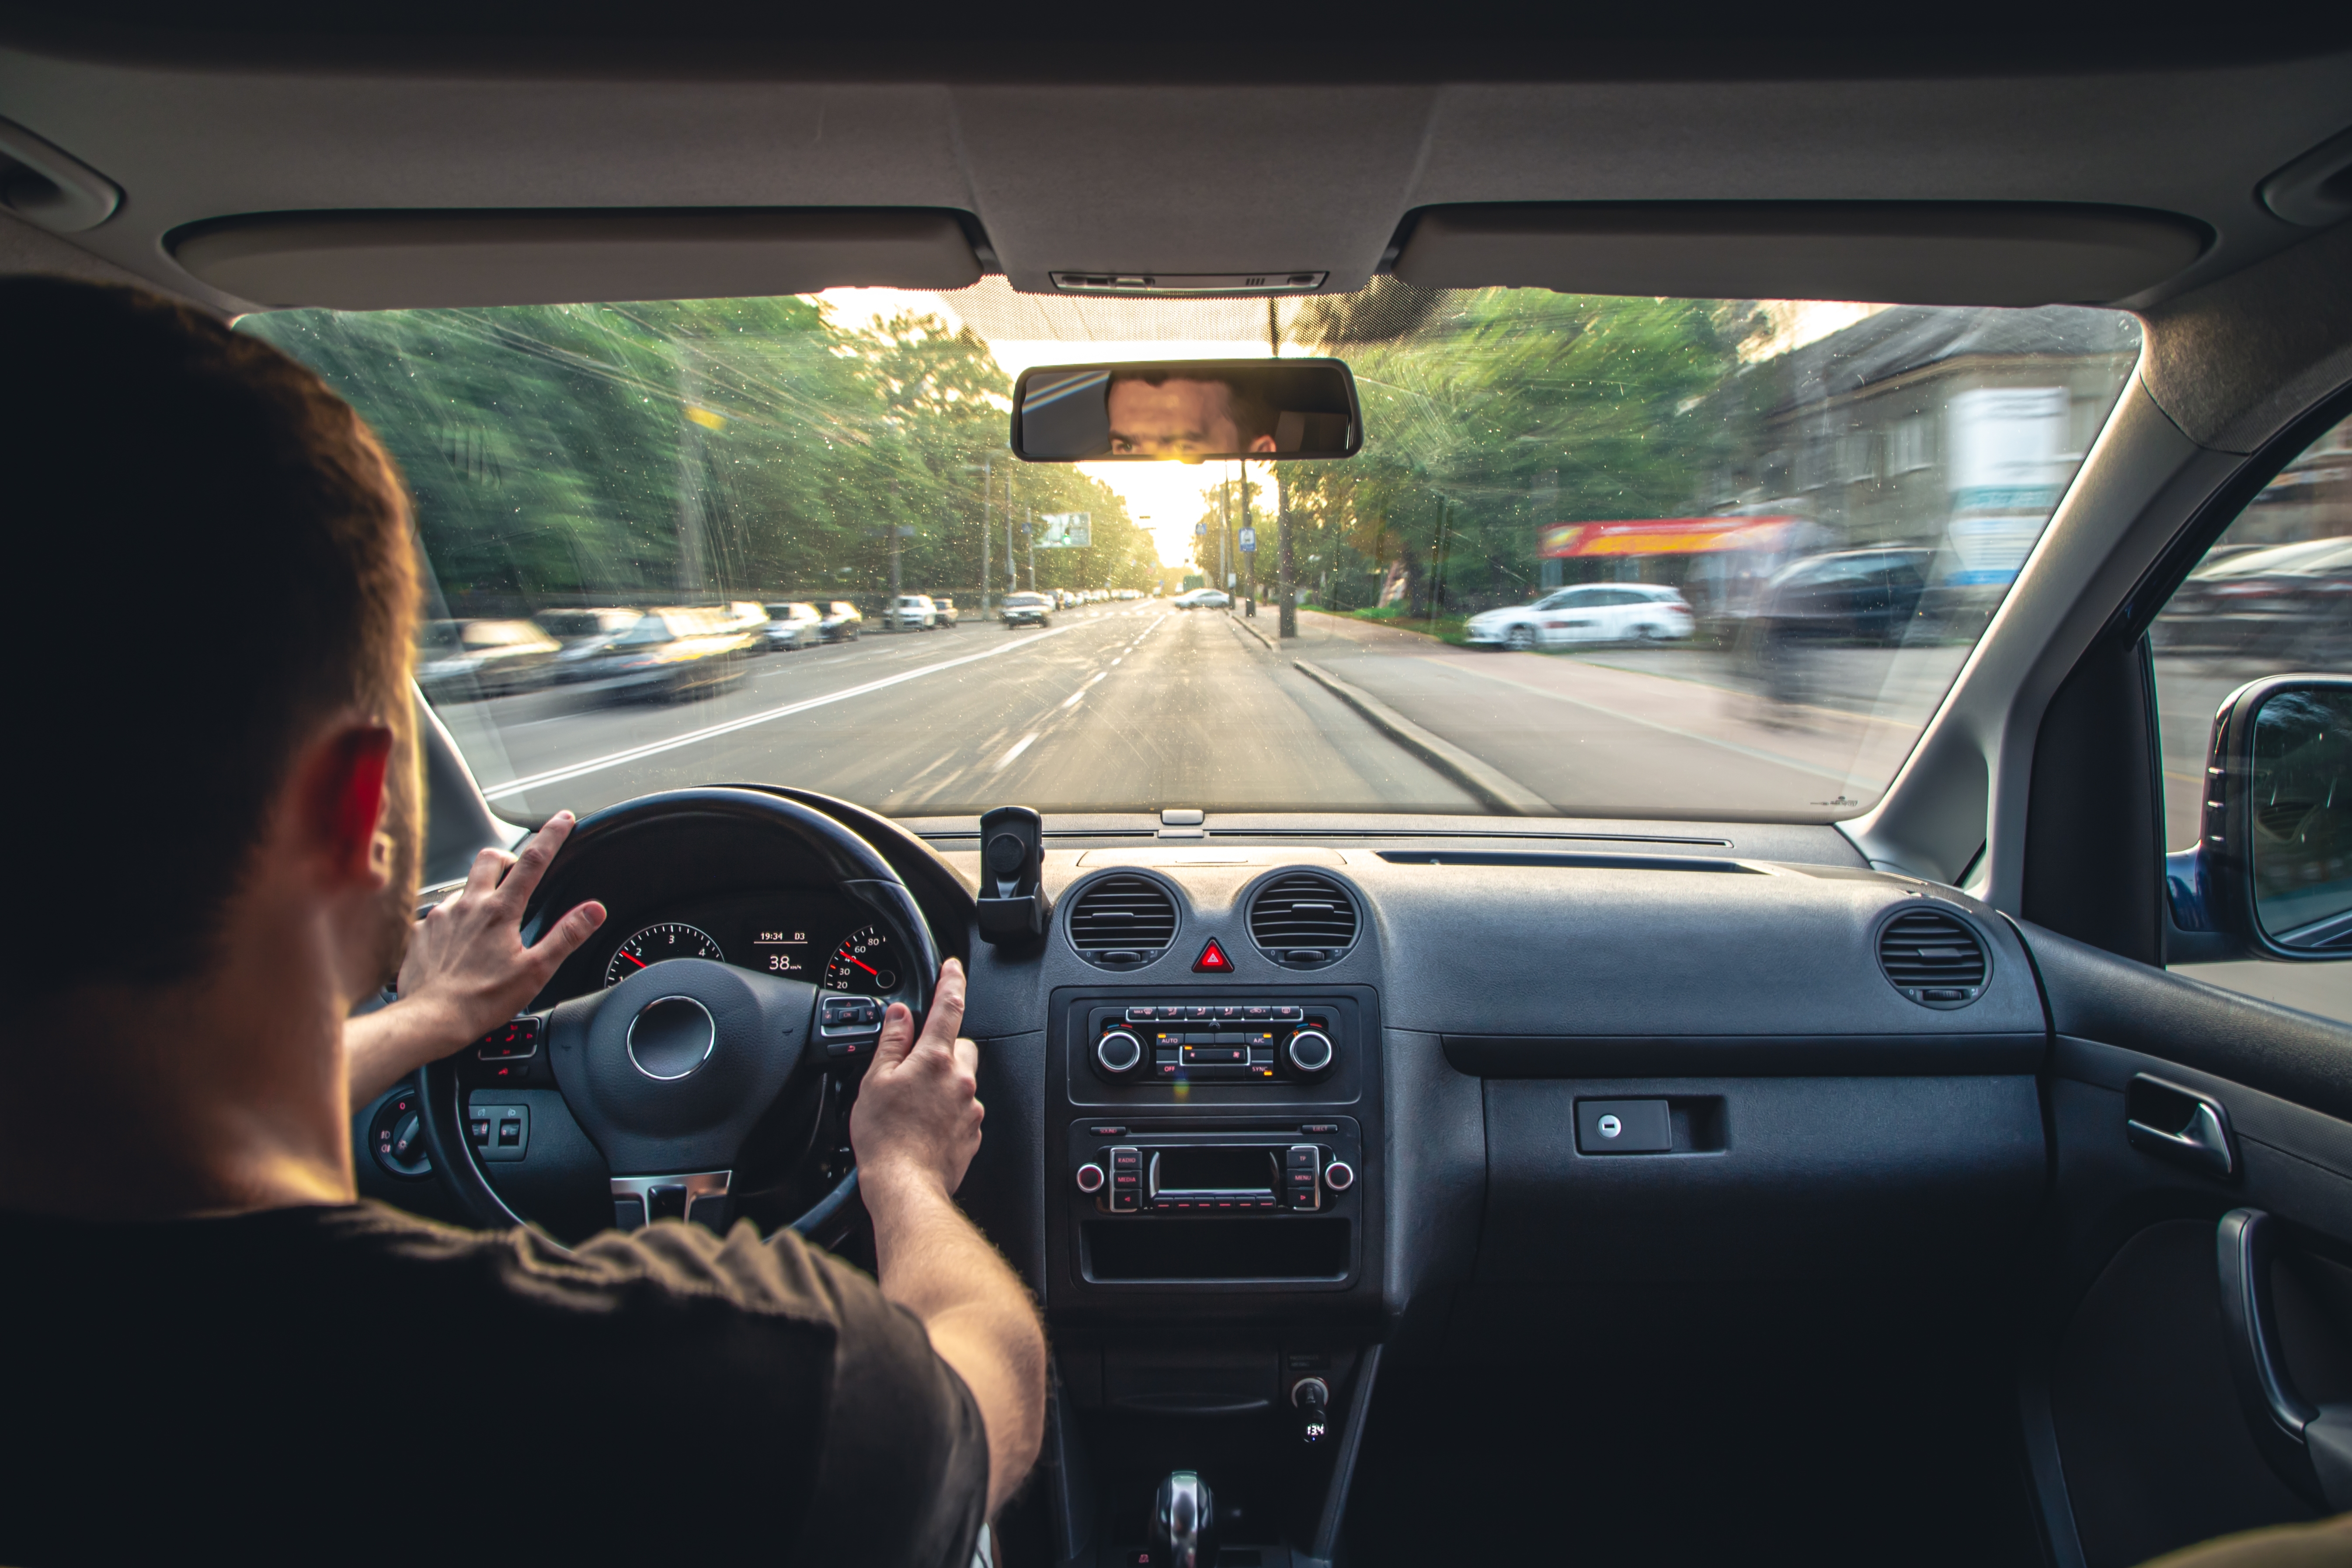 A man driving a vehicle | Source: Shutterstock